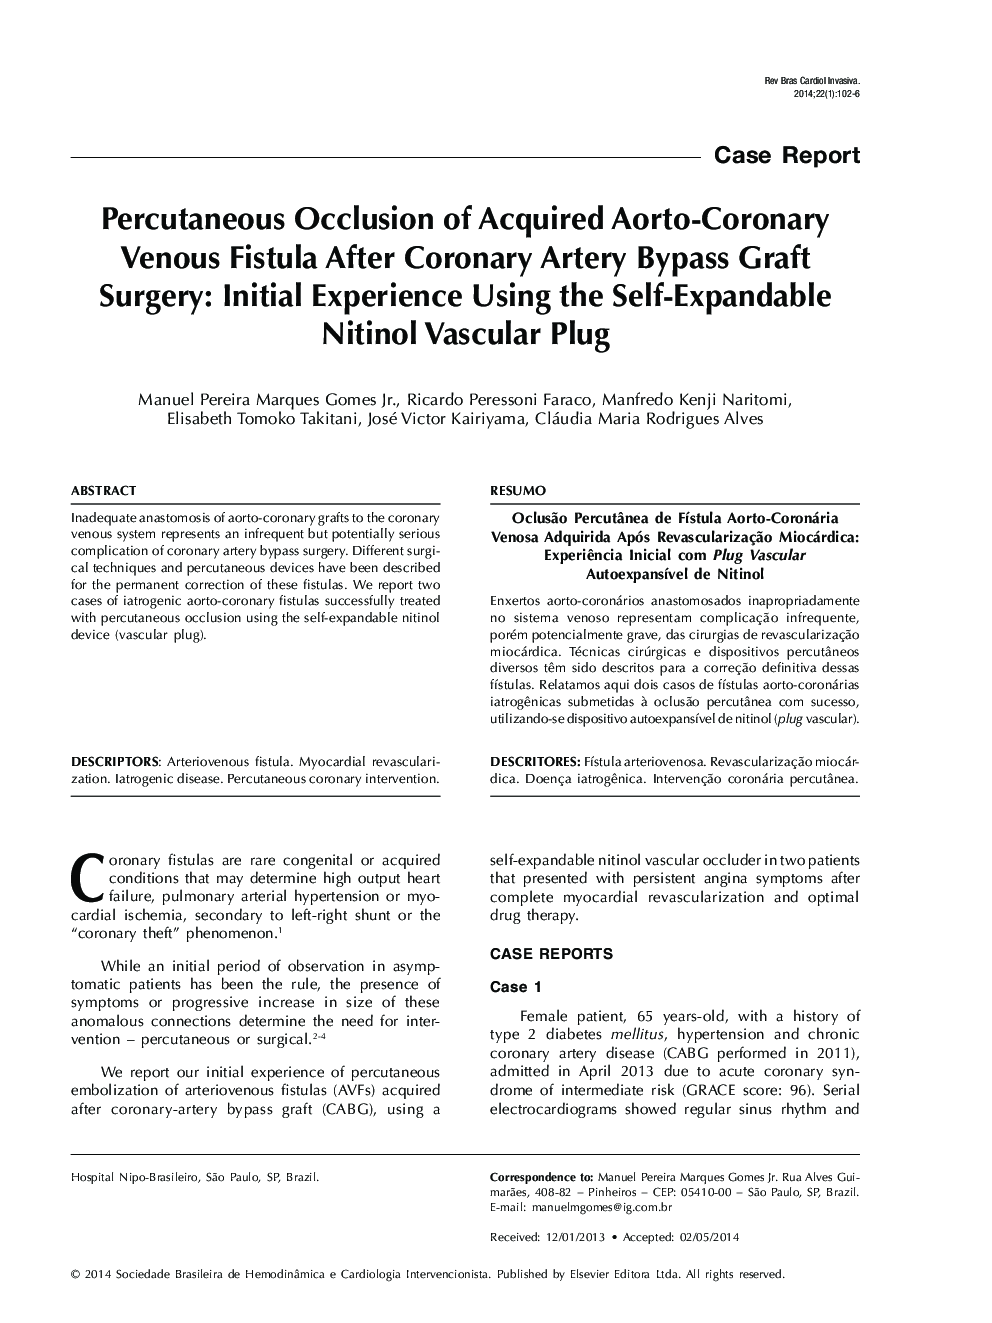 Percutaneous Occlusion of Acquired Aorto-Coronary Venous Fistula After Coronary Artery Bypass Graft Surgery: Initial Experience Using the Self-Expandable Nitinol Vascular Plug